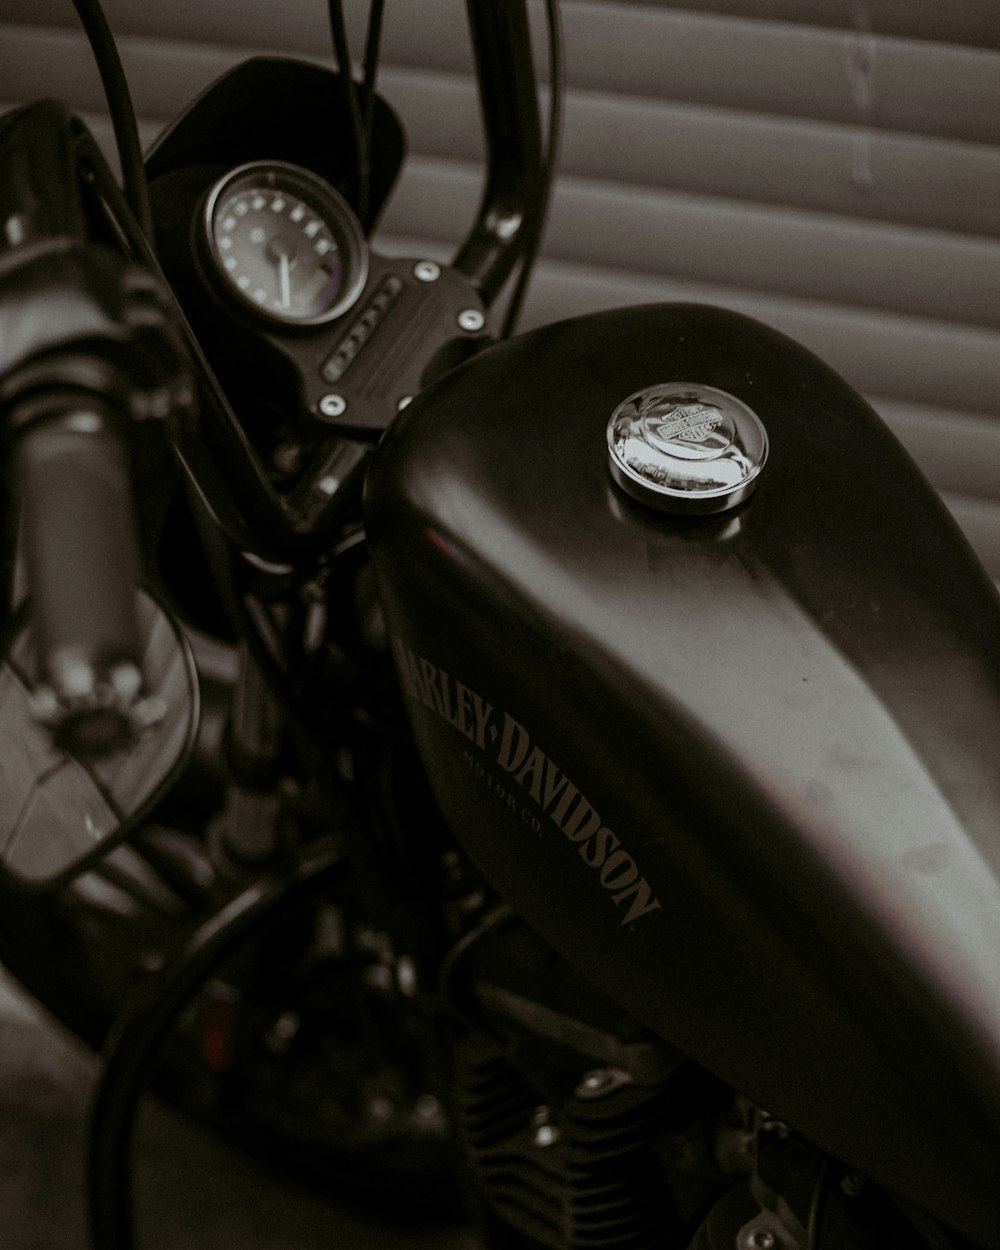 Motocicleta Harley Davidson negra y gris